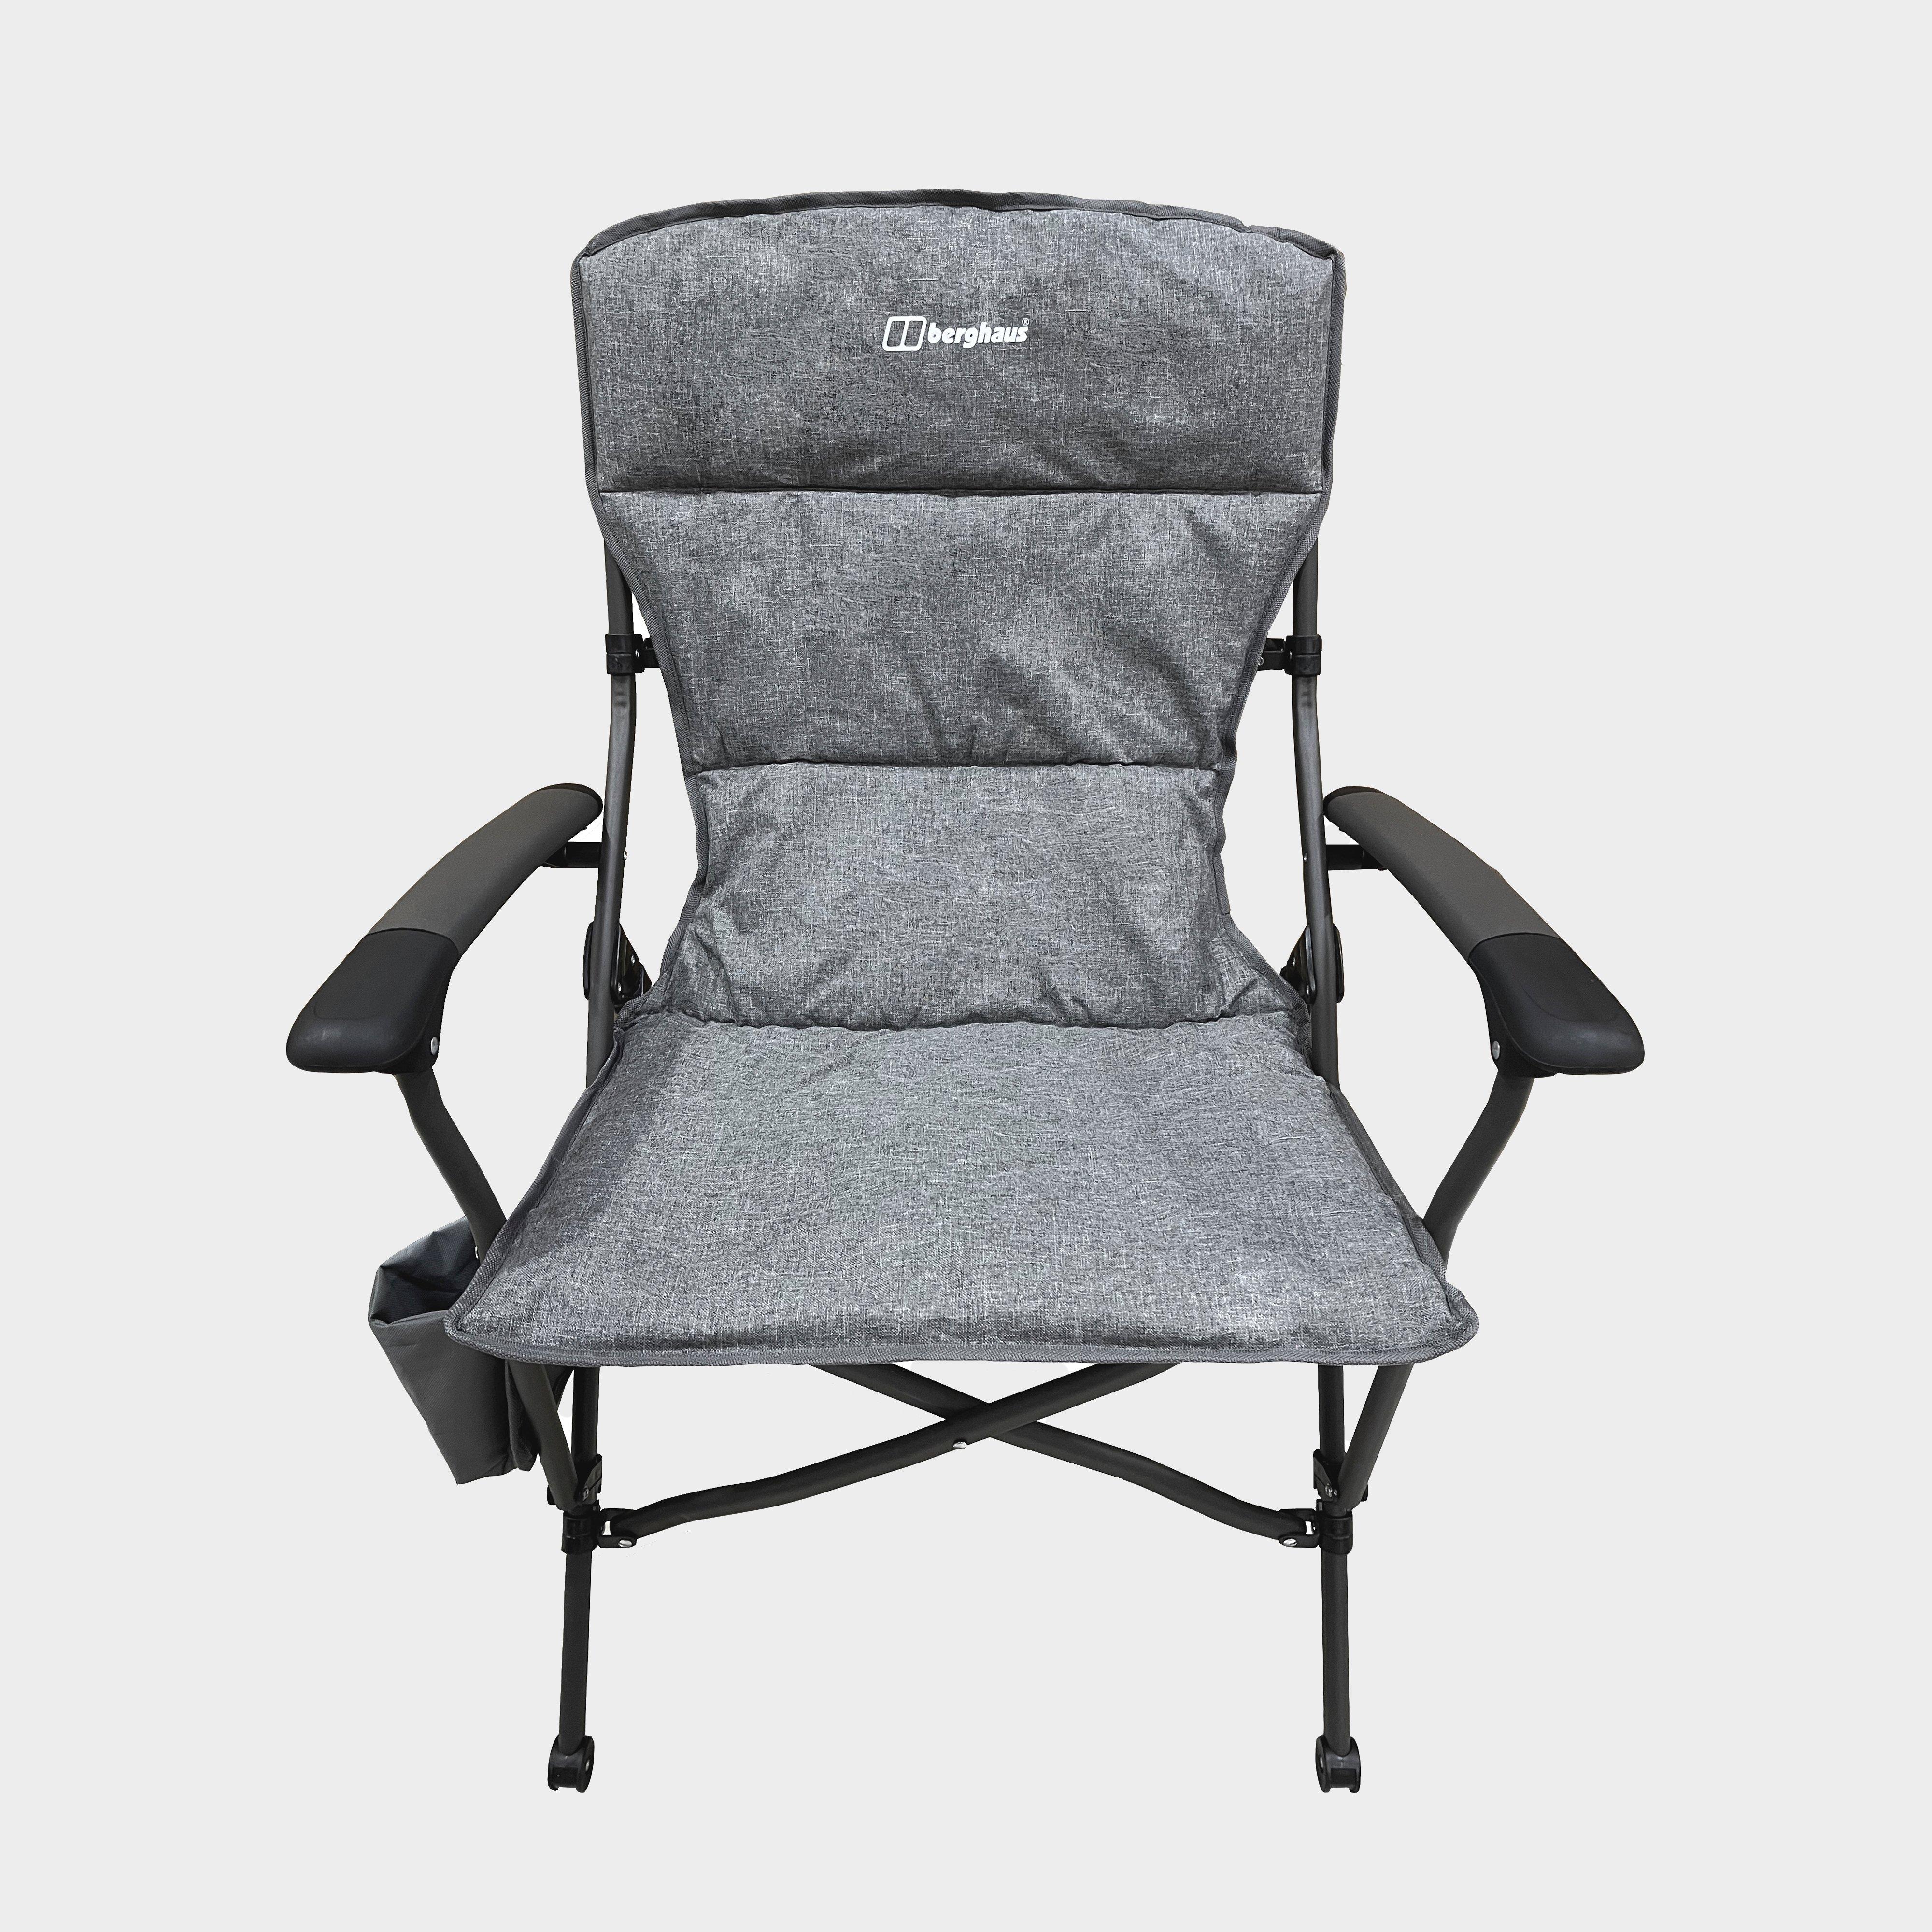  Berghaus Freeform Highback Chair, Grey